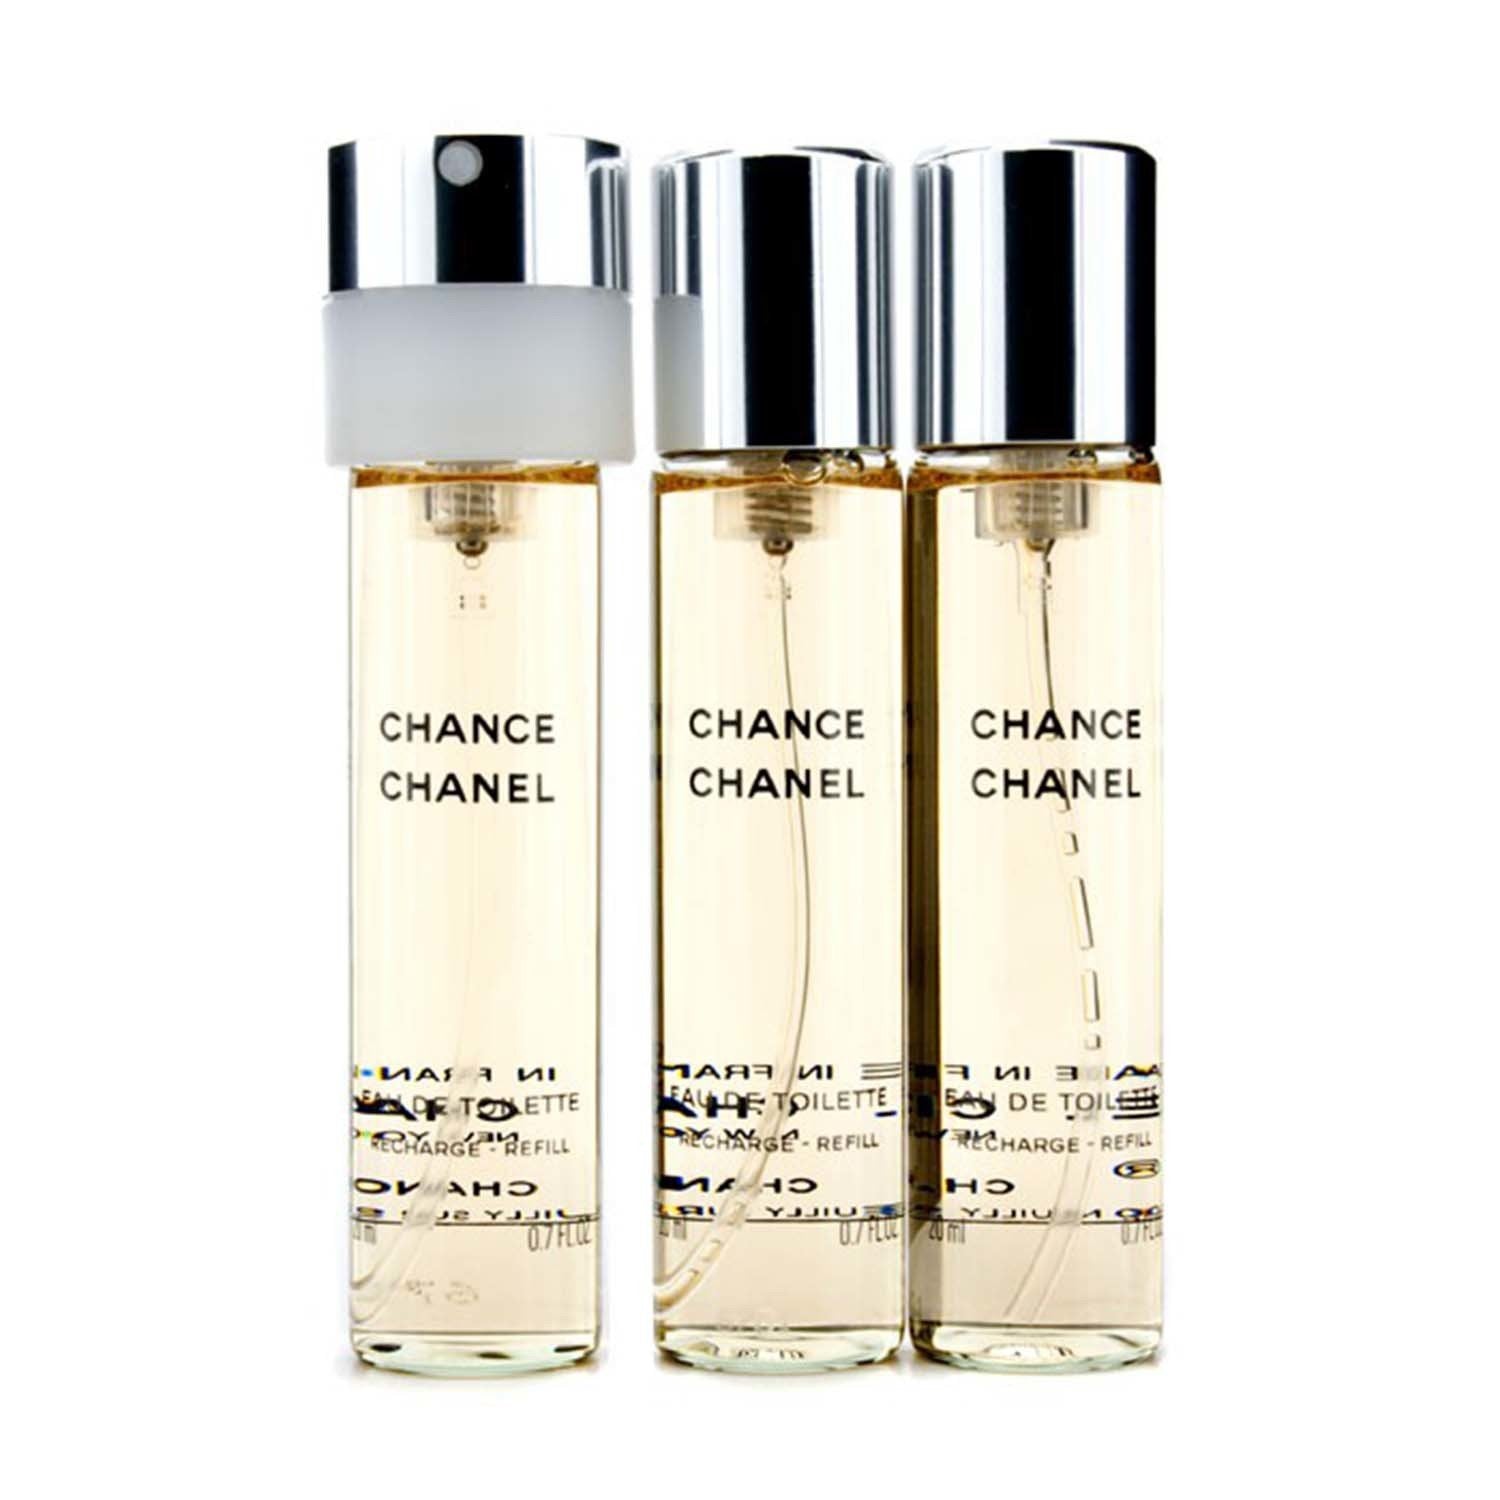 Chanel Chance Eau Fraiche Eau De Toilette Twist & Spray Refill - Gleek